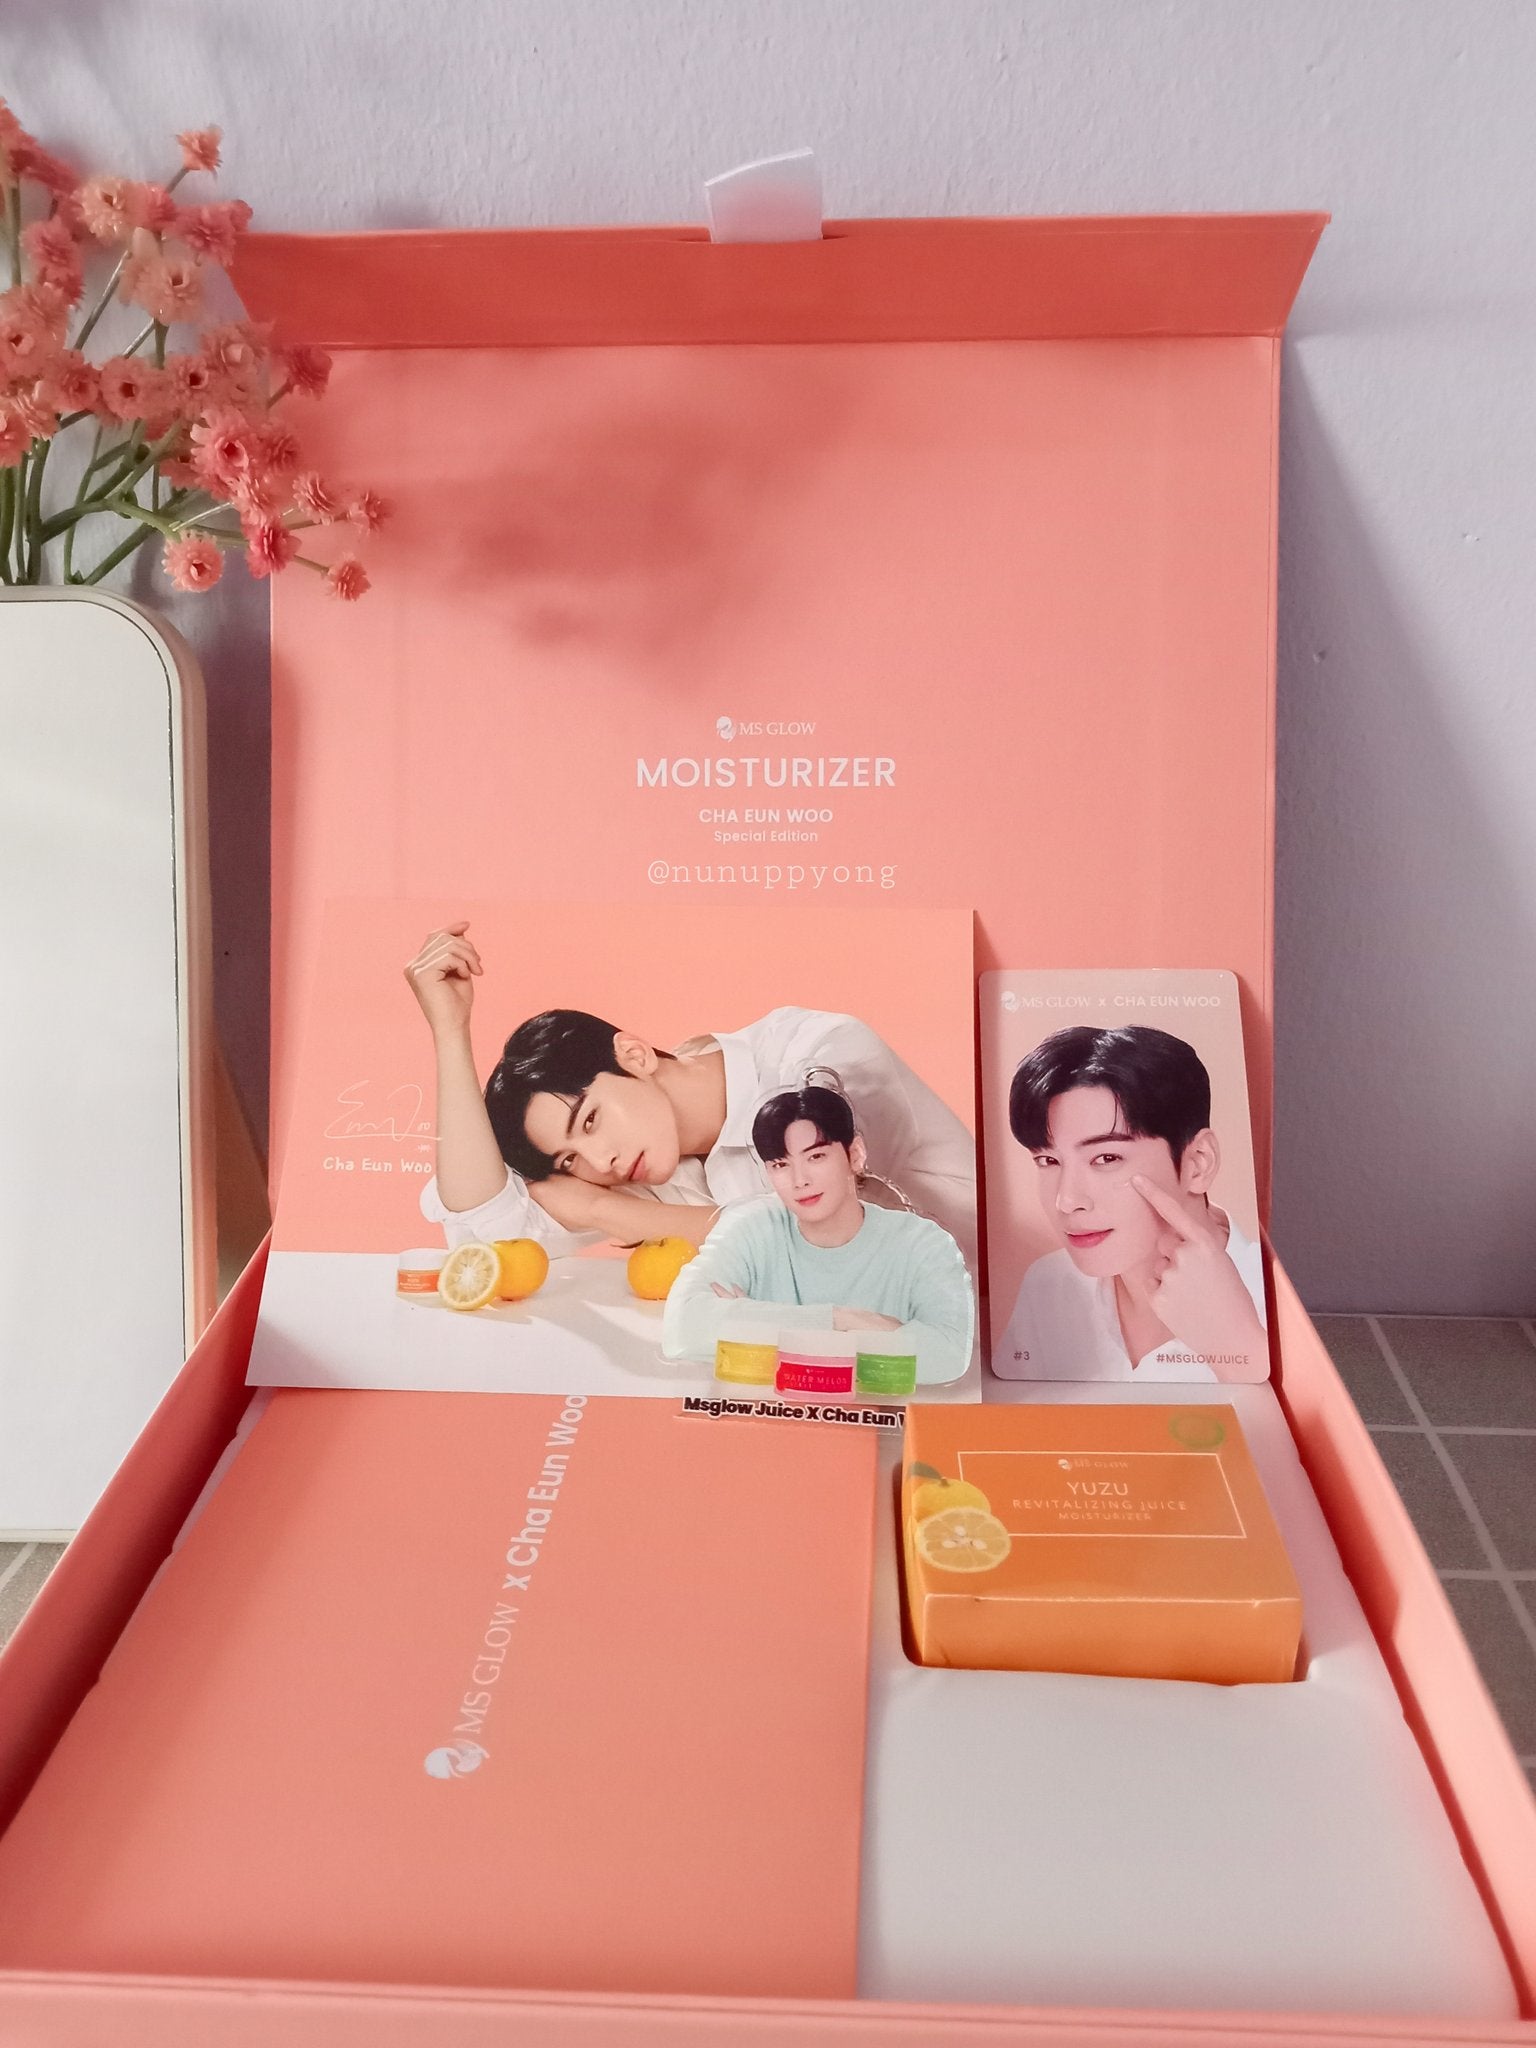 MS GLOW x Cha Eun Woo Juice Moisturizer Joint Moisturizing Cream Gift Box